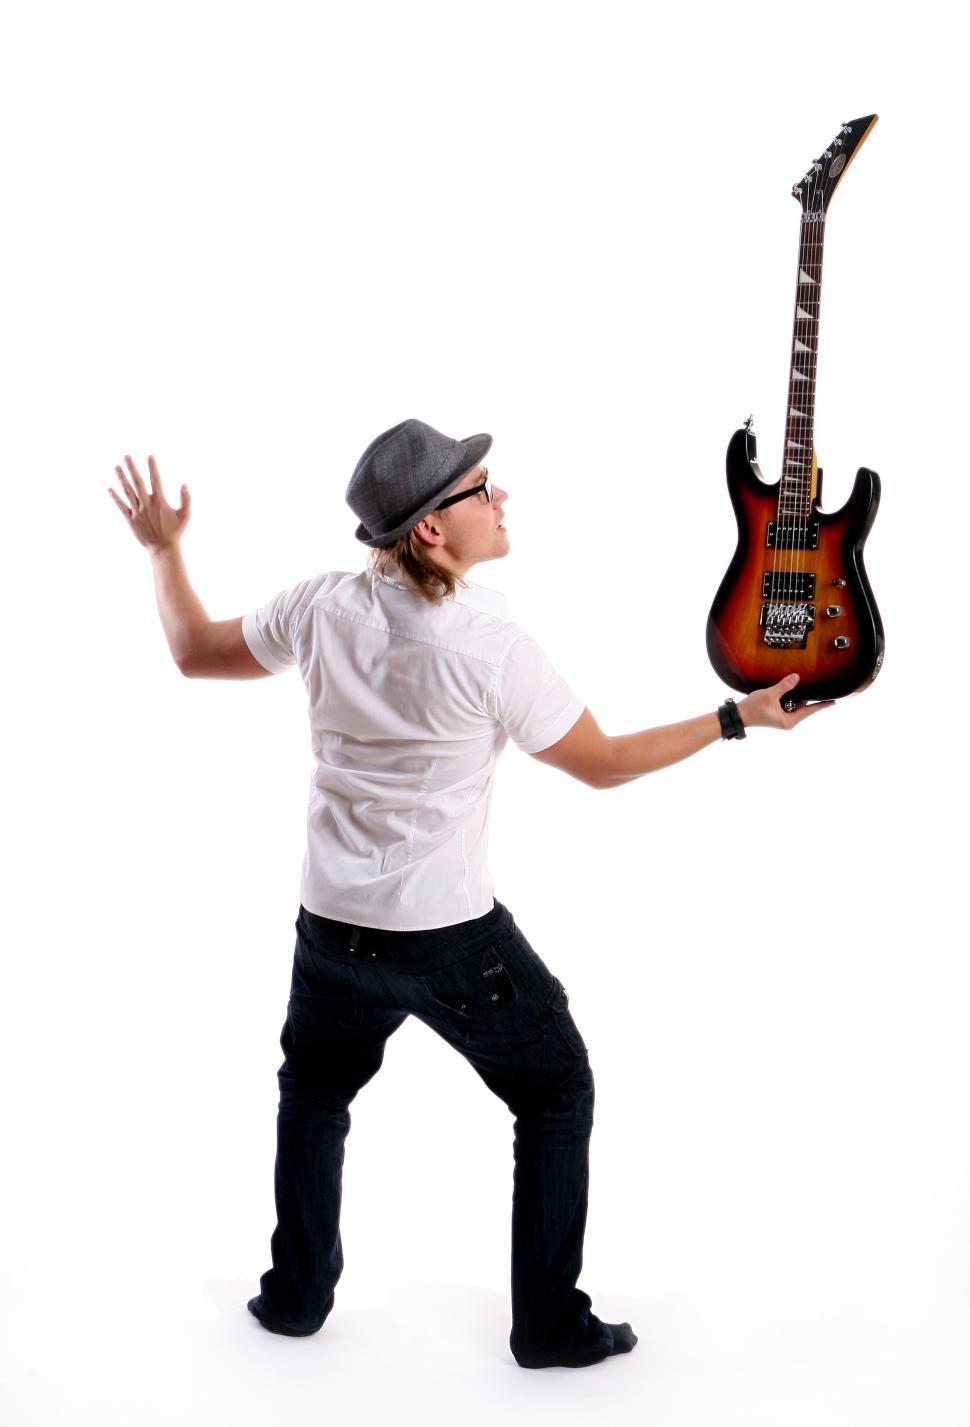 Free Image of Musician balancing a guitar 